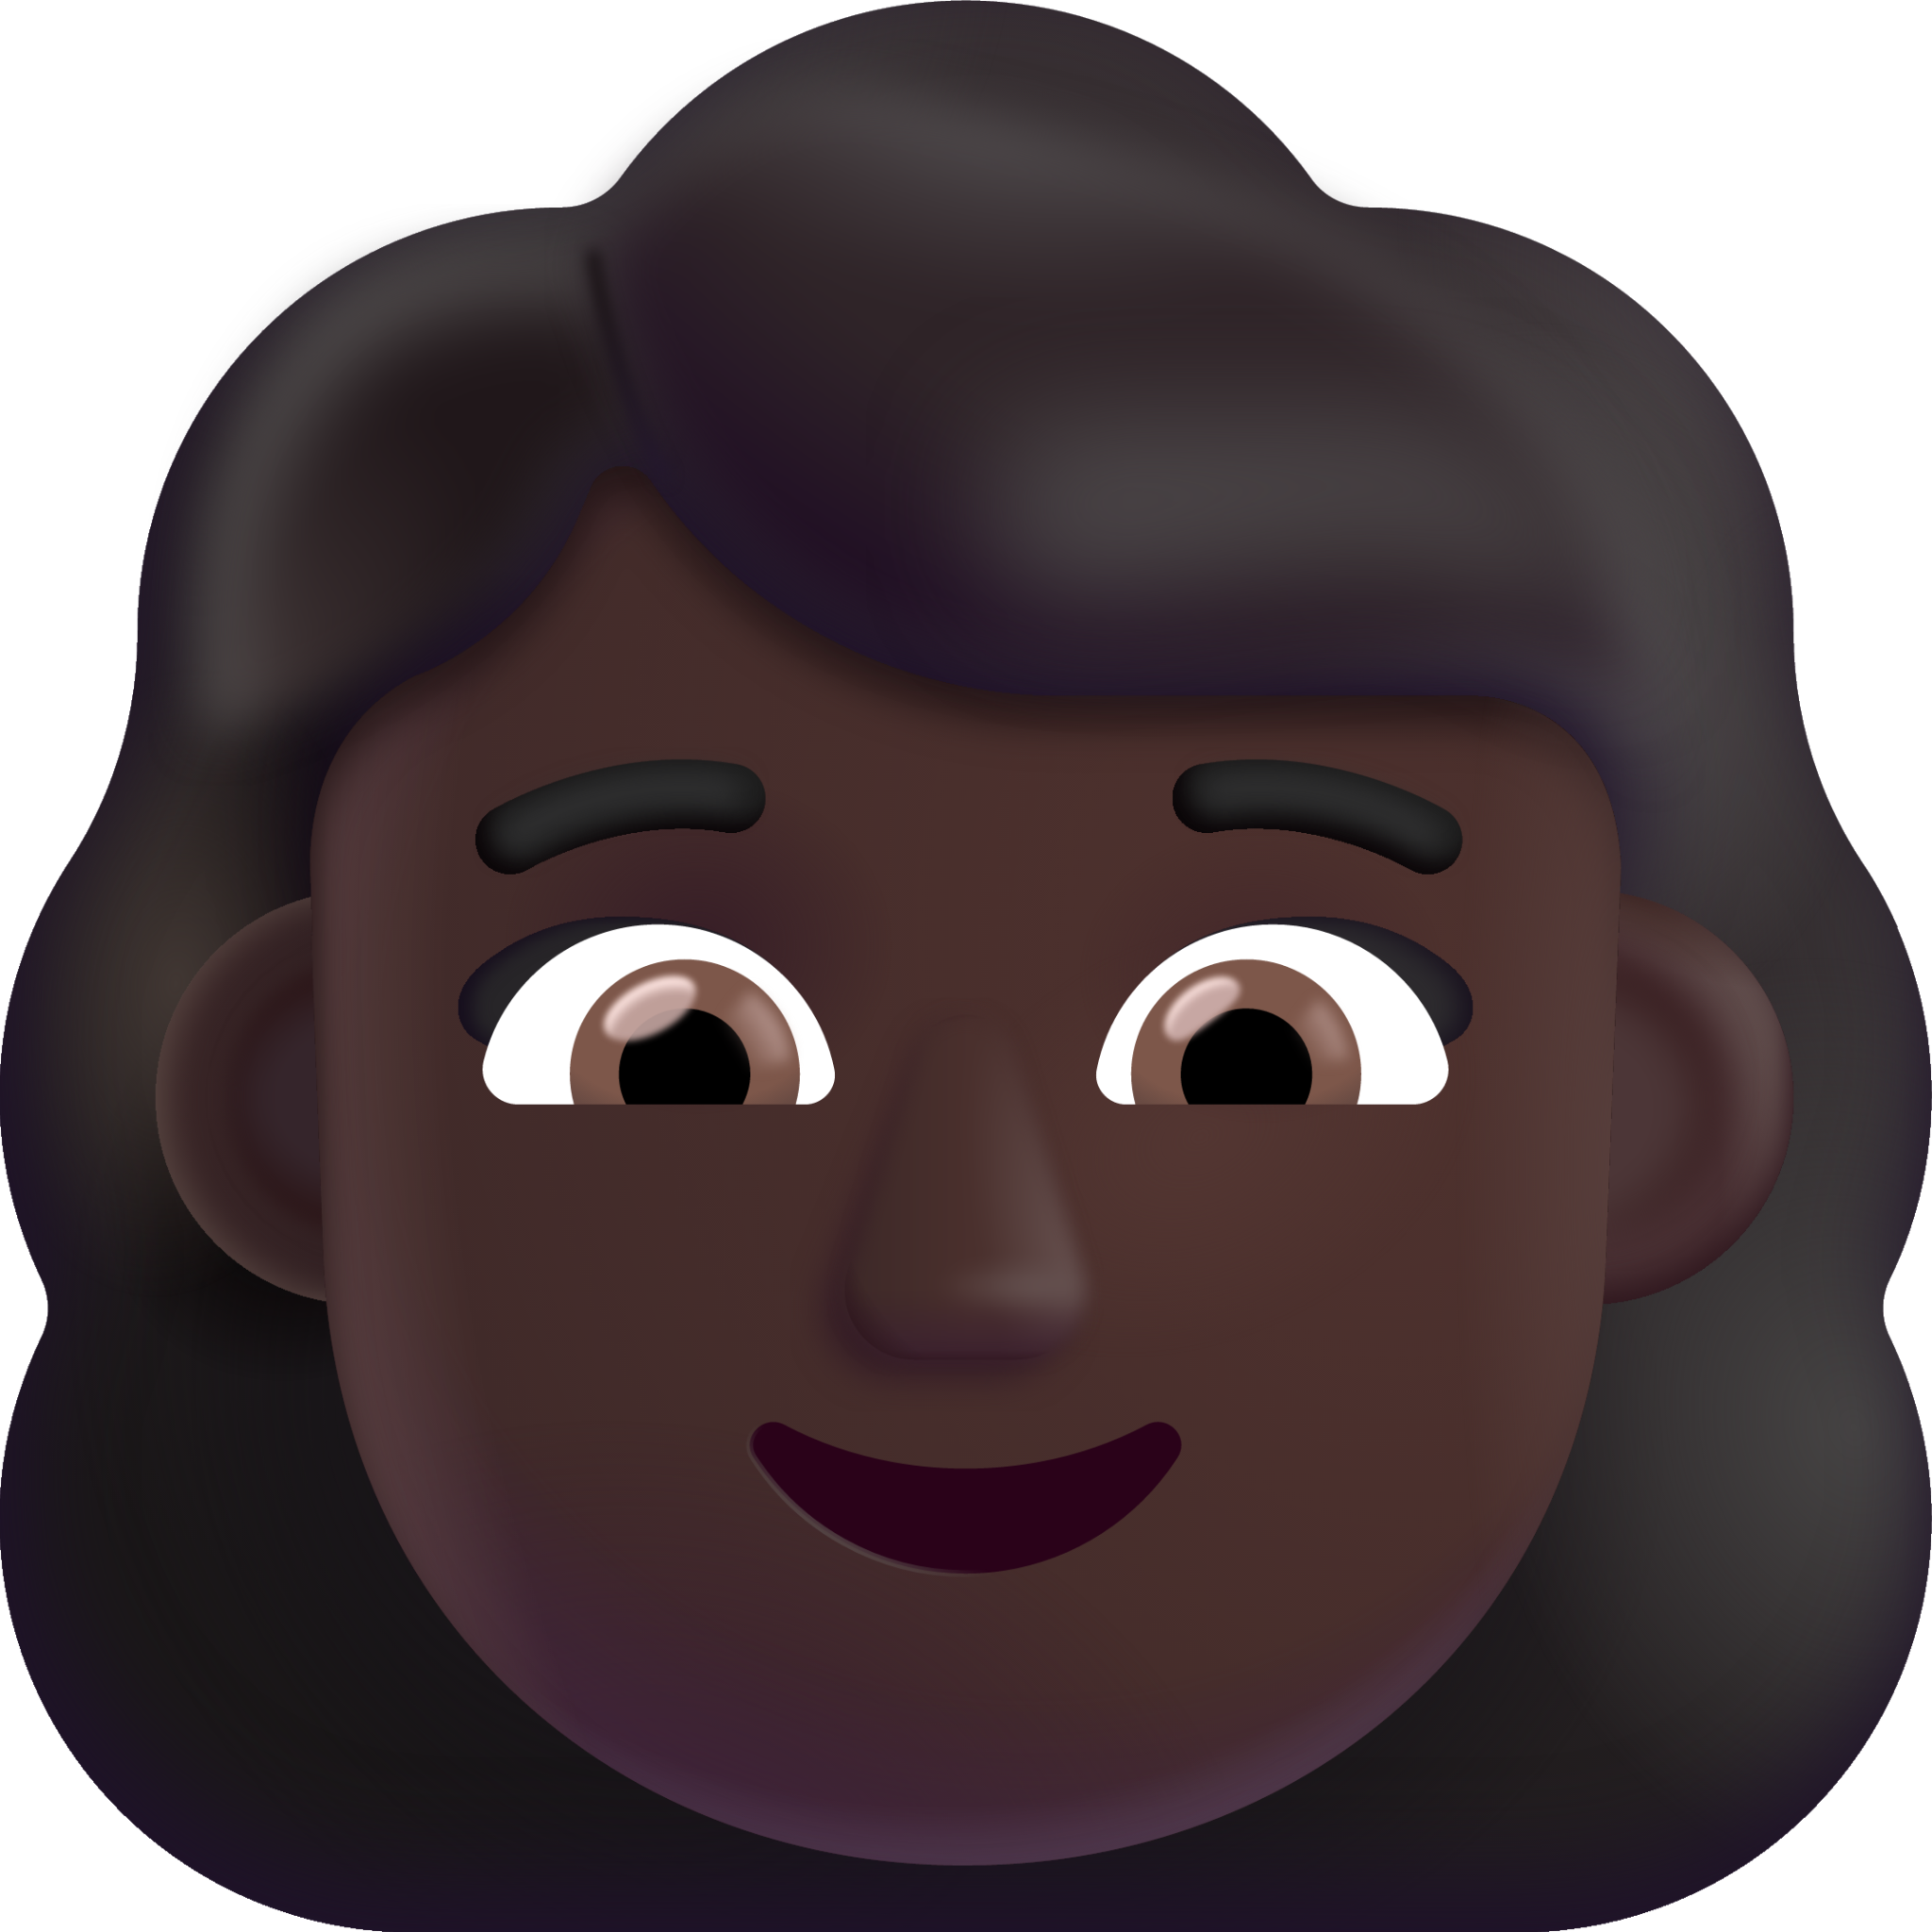 woman dark emoji